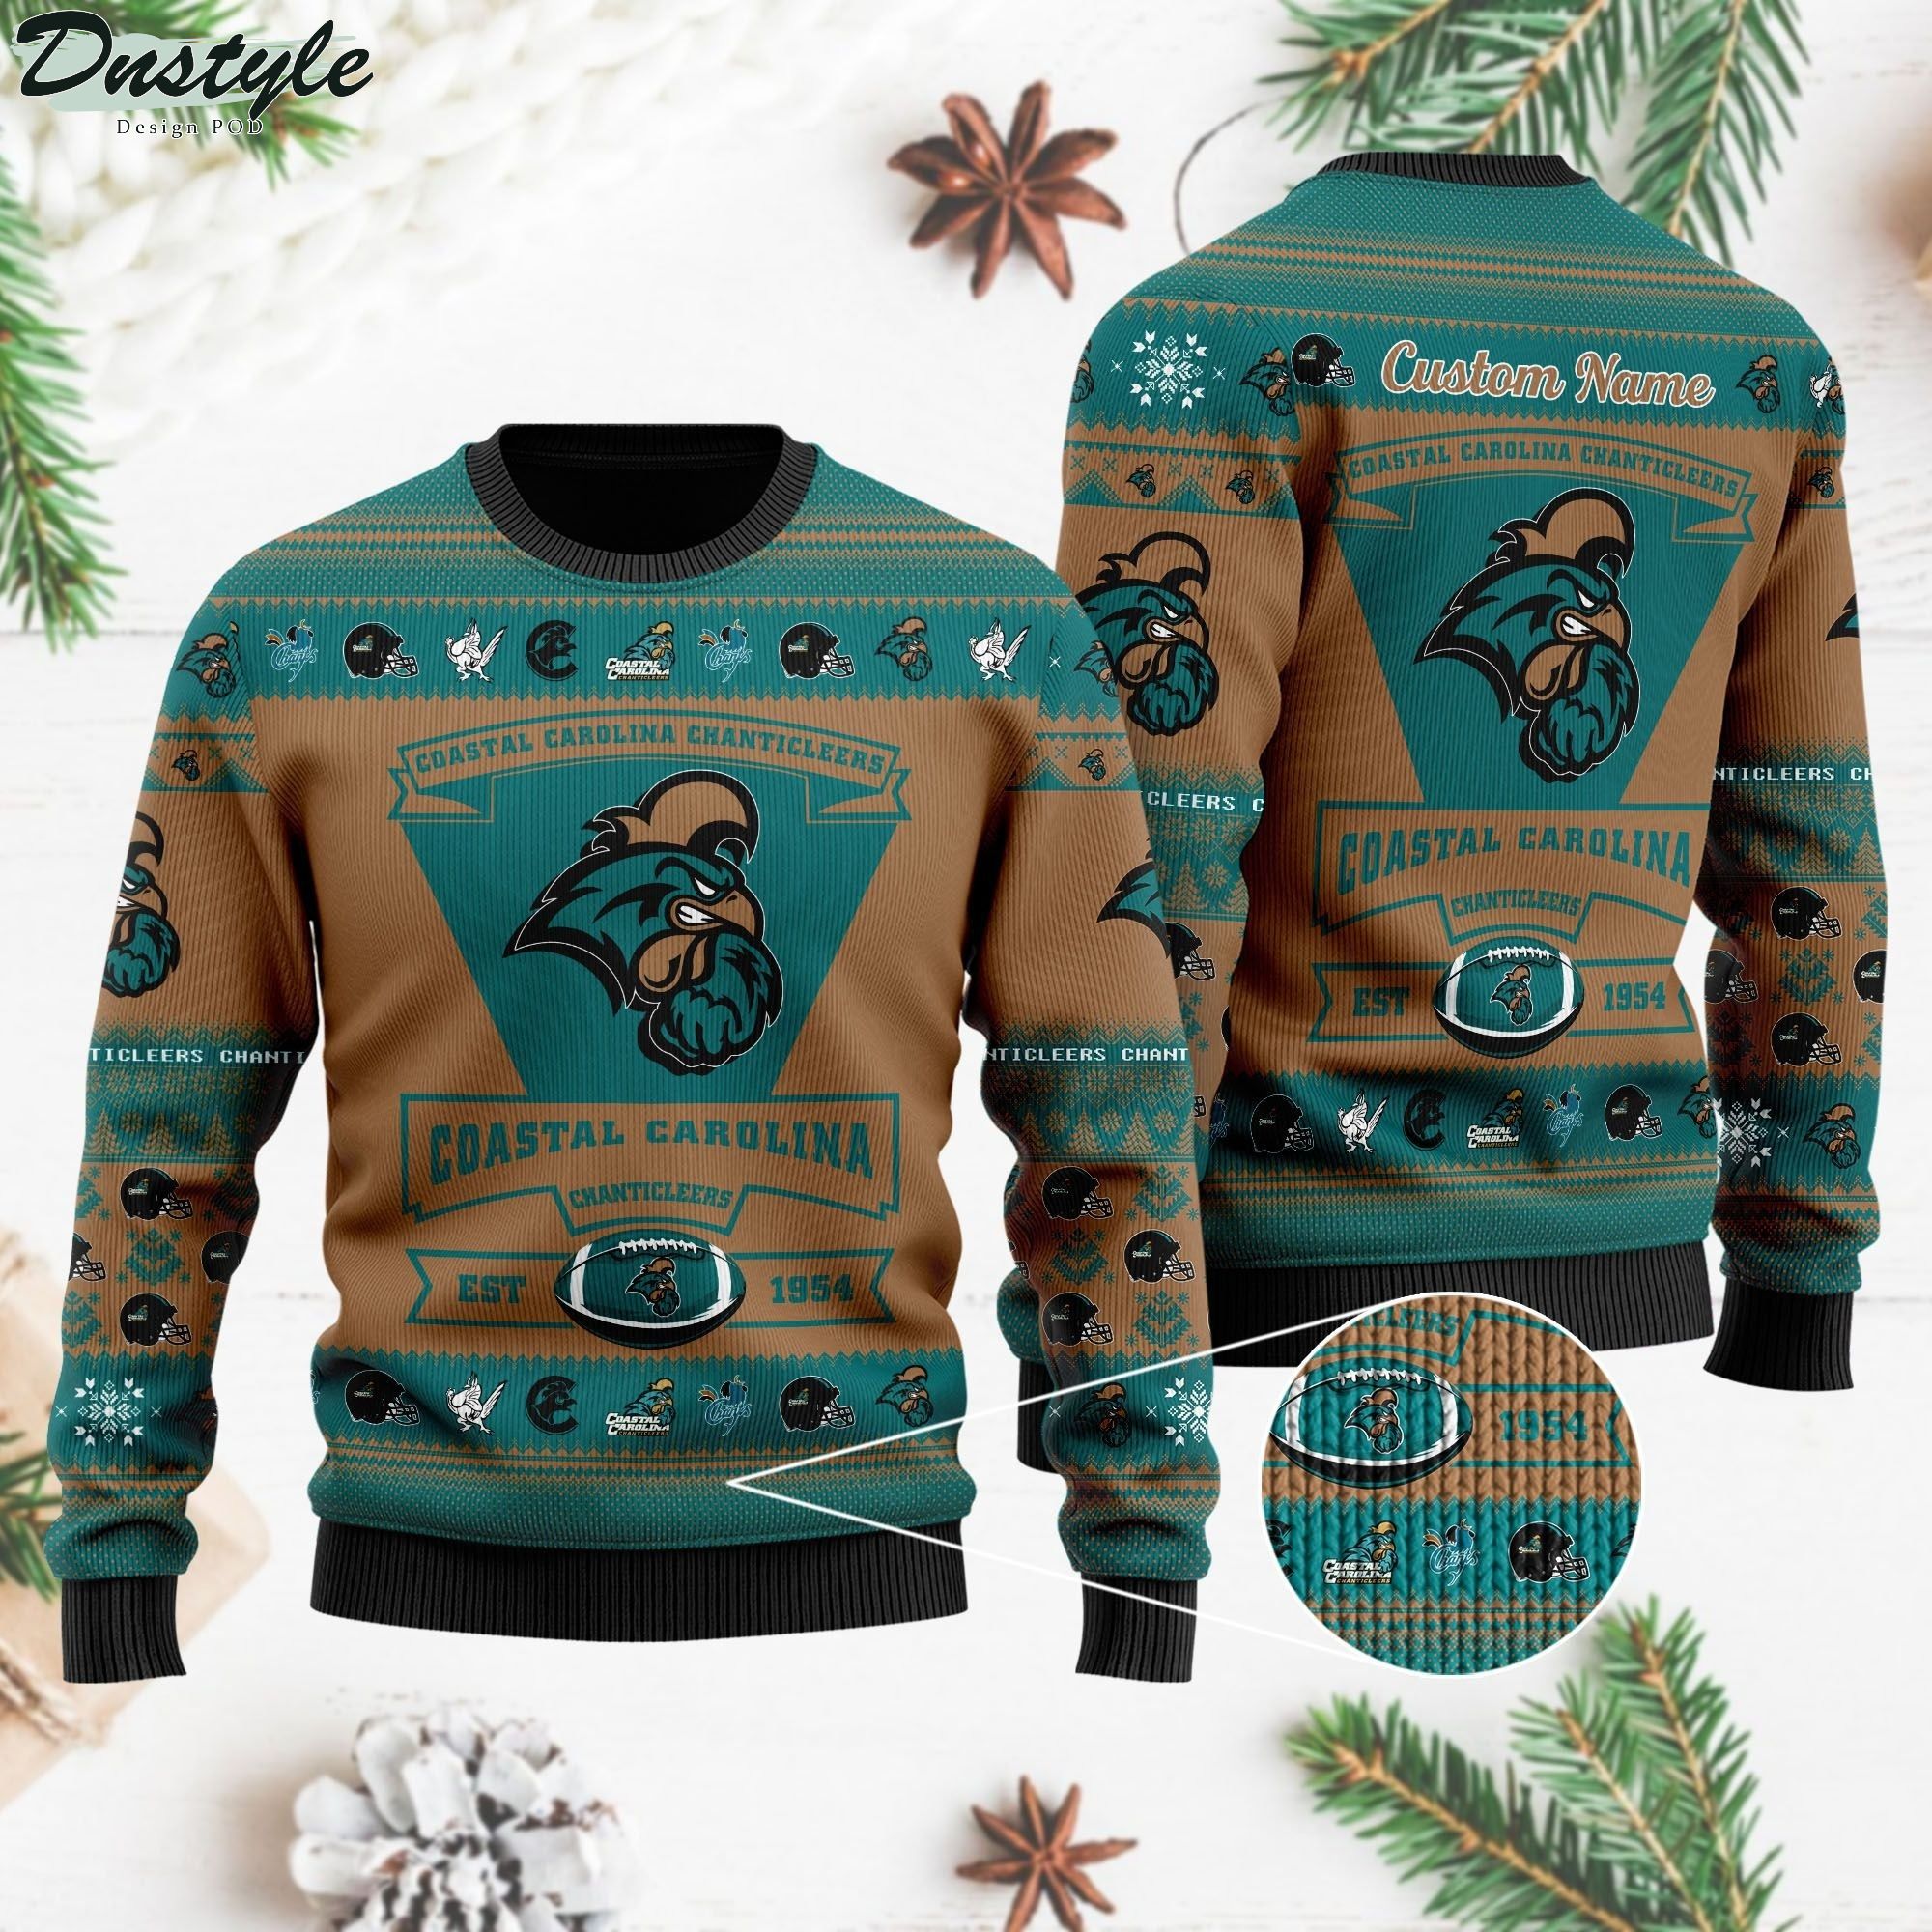 Coastal Carolina Chanticleers Football Team Logo Personalized Ugly Christmas Sweater